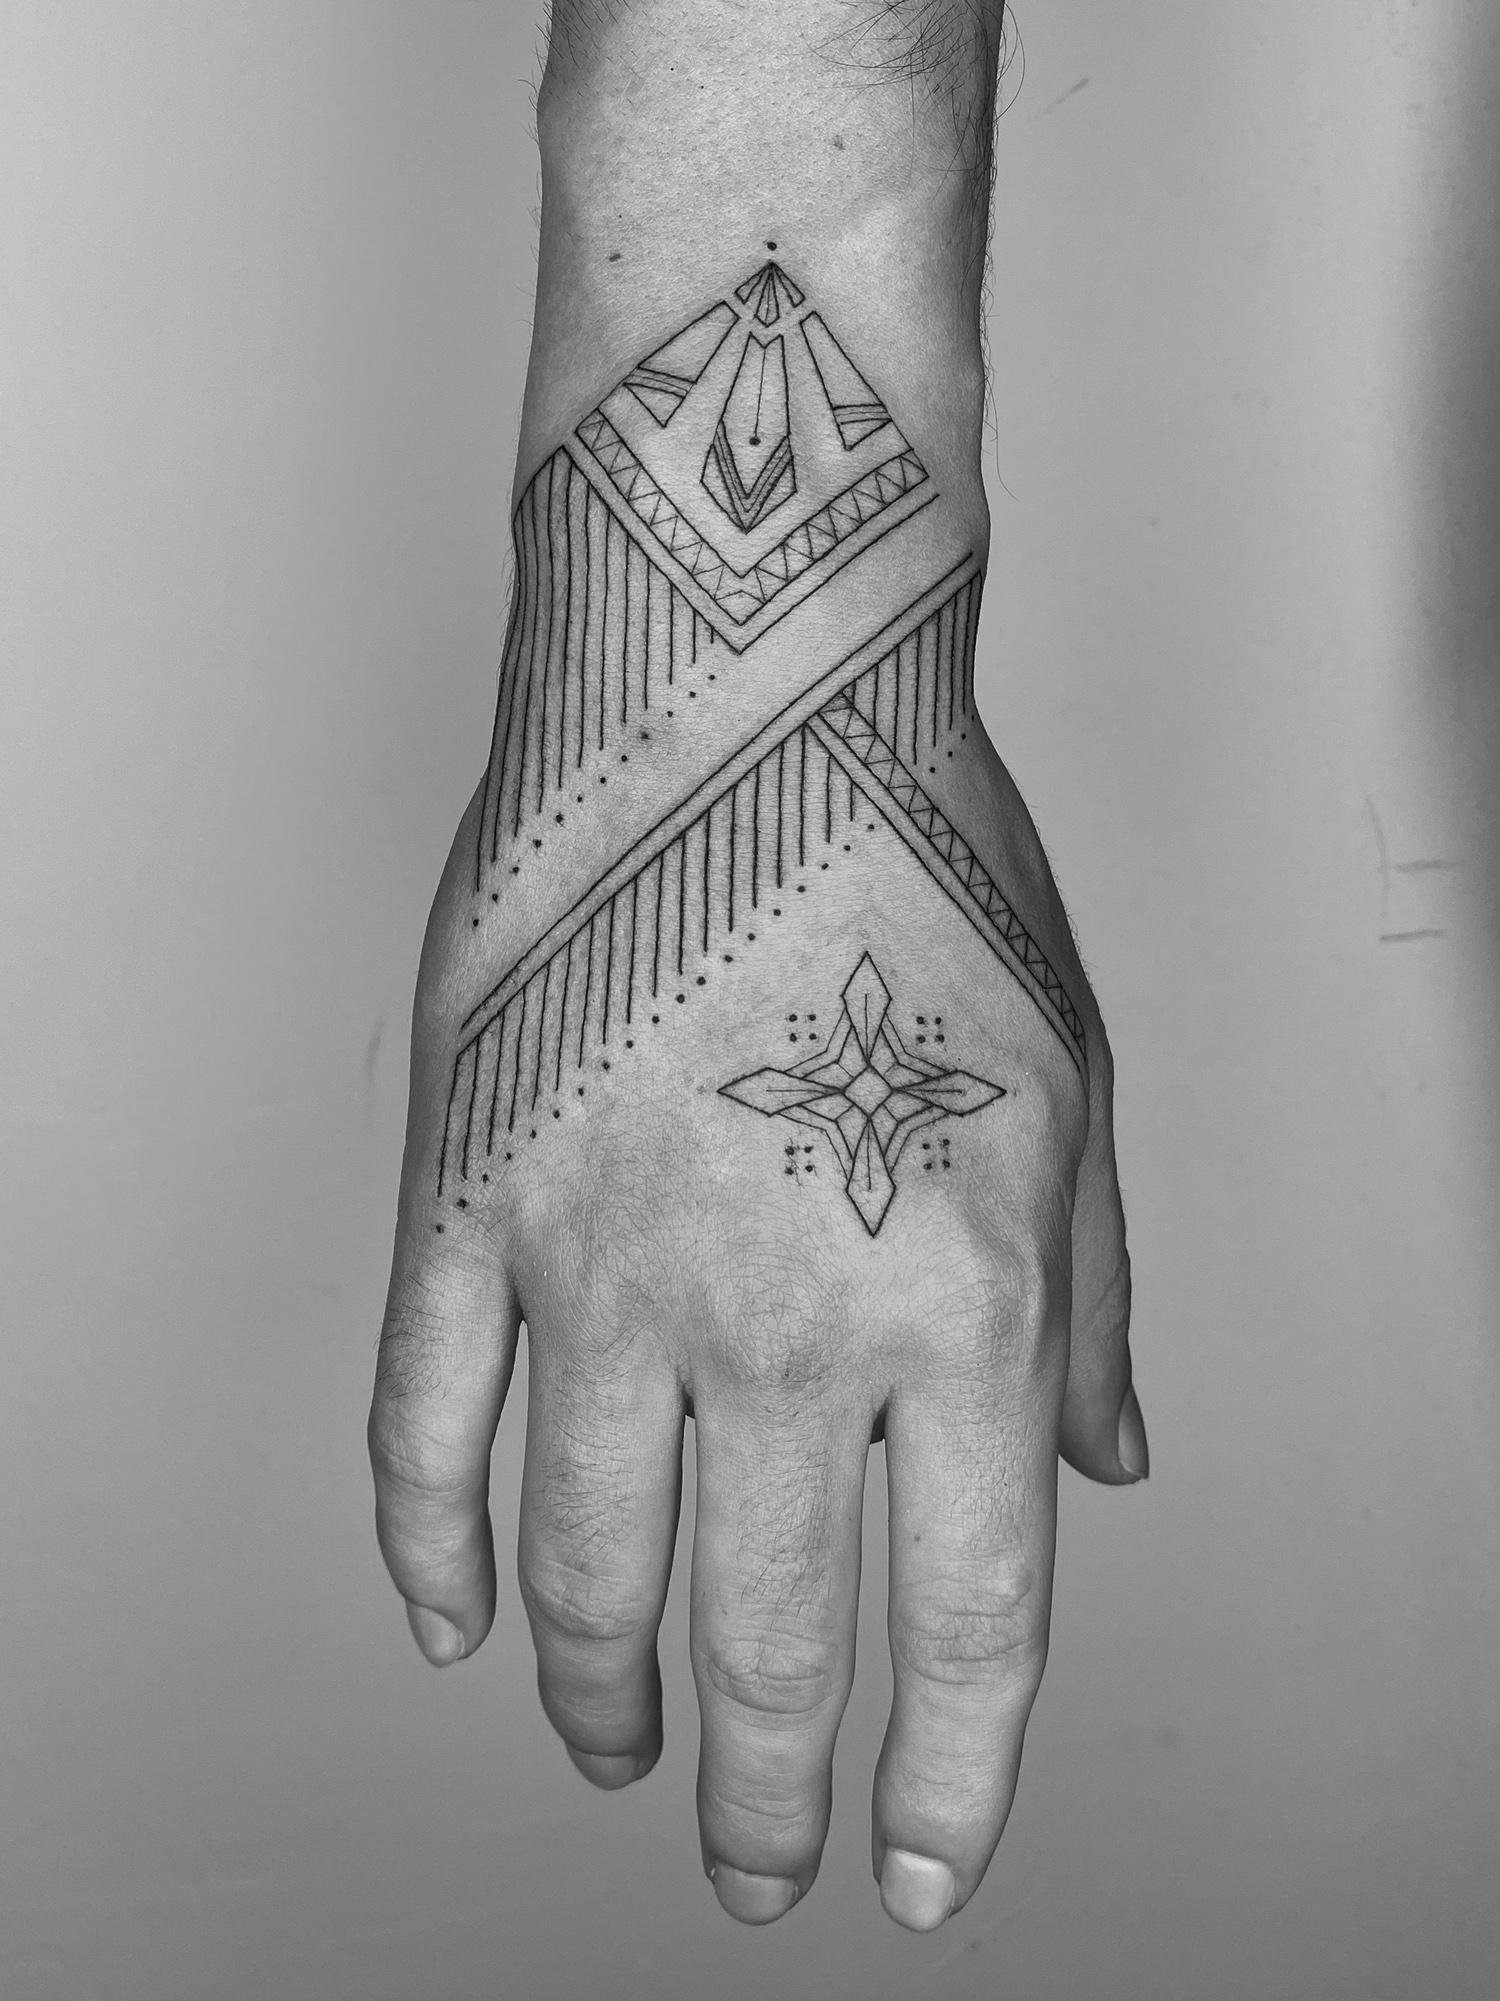 Tattoo by Scott Campbell